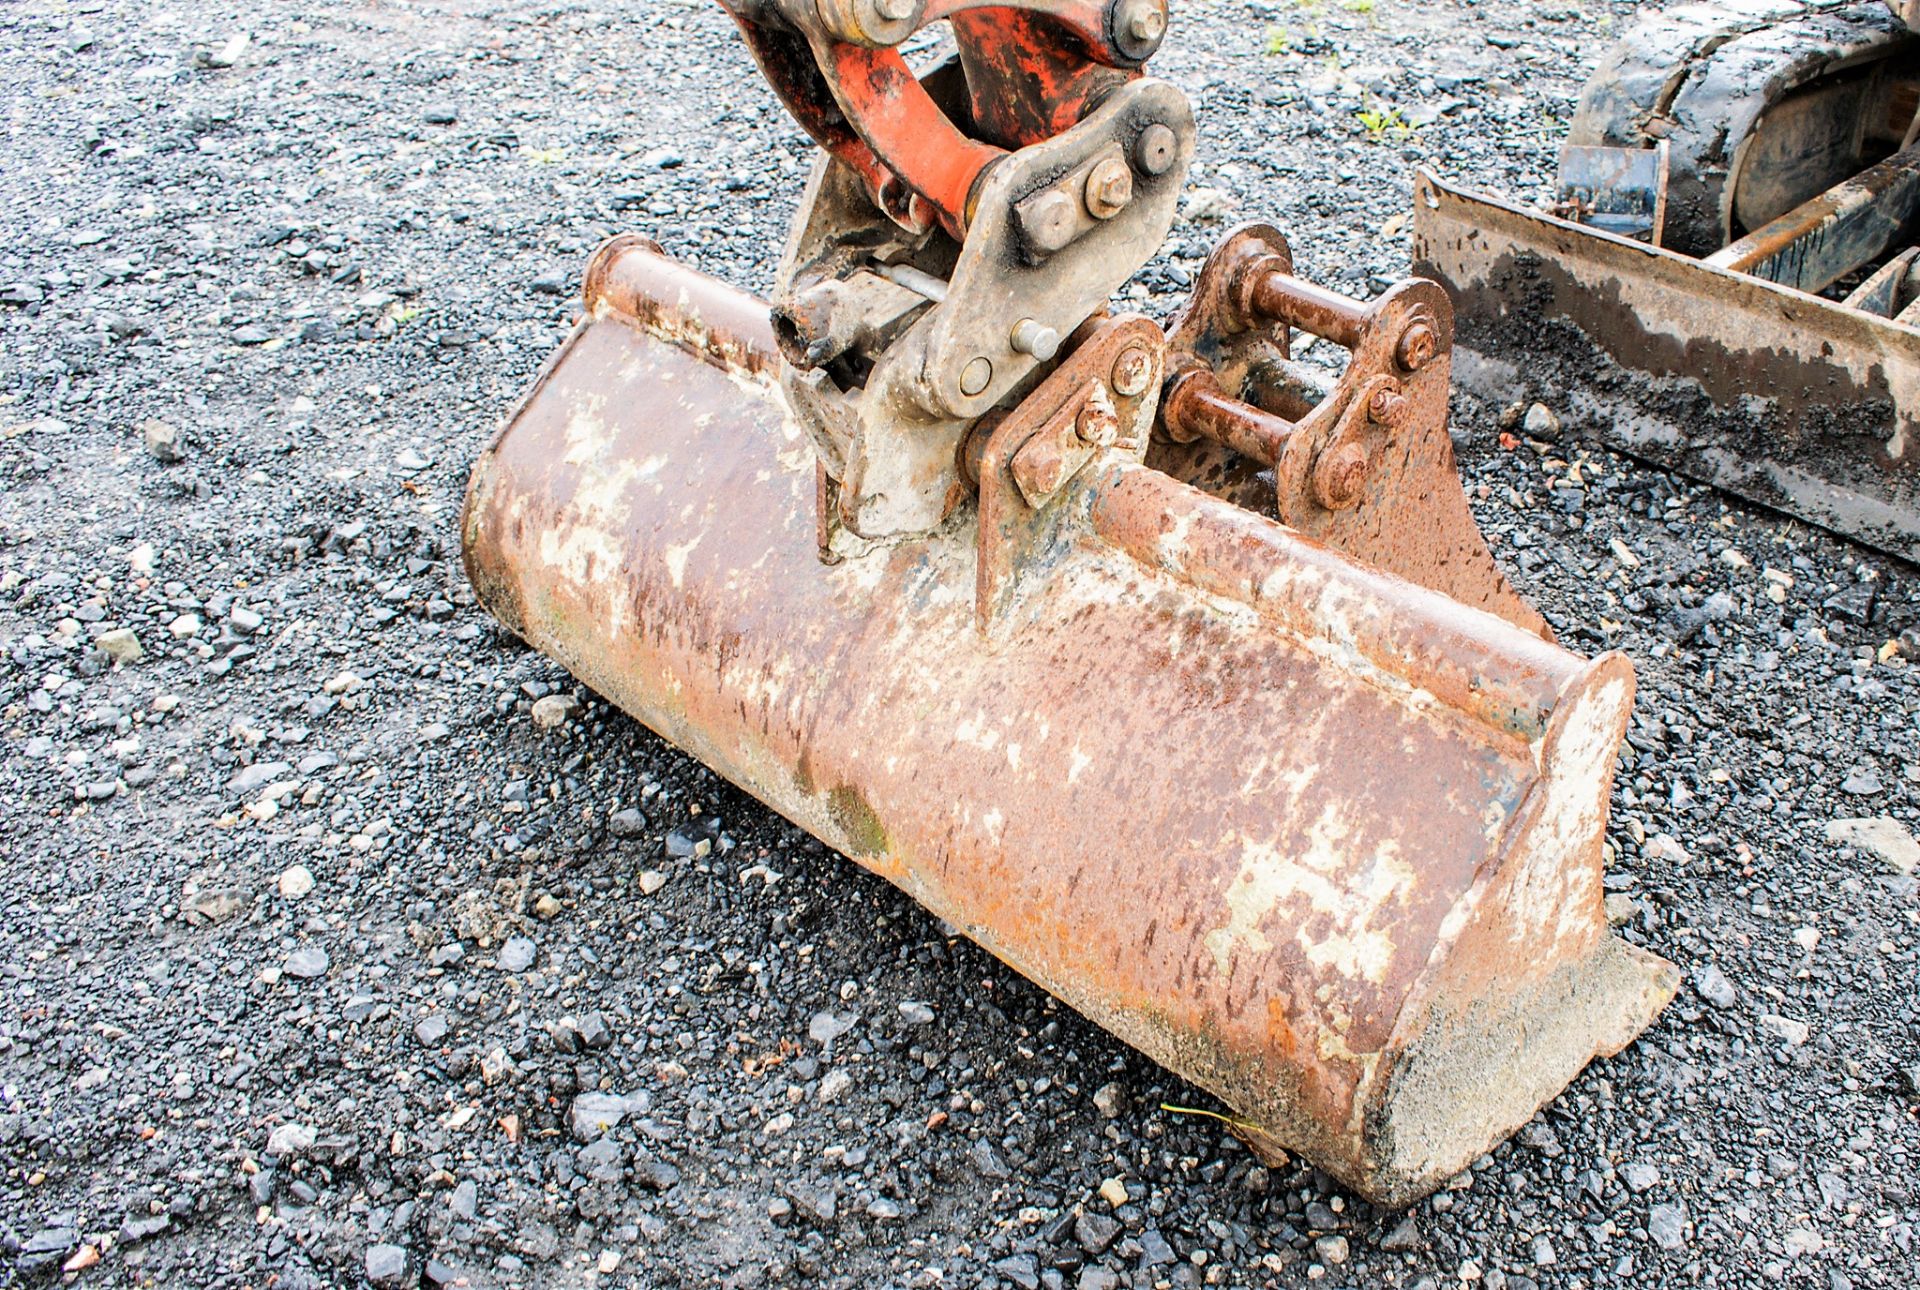 Kubota KX016-4 1.6 tonne rubber tracked mini excavator Year: 2014 S/N: 57528 Recorded Hours: 2621 - Image 12 of 19